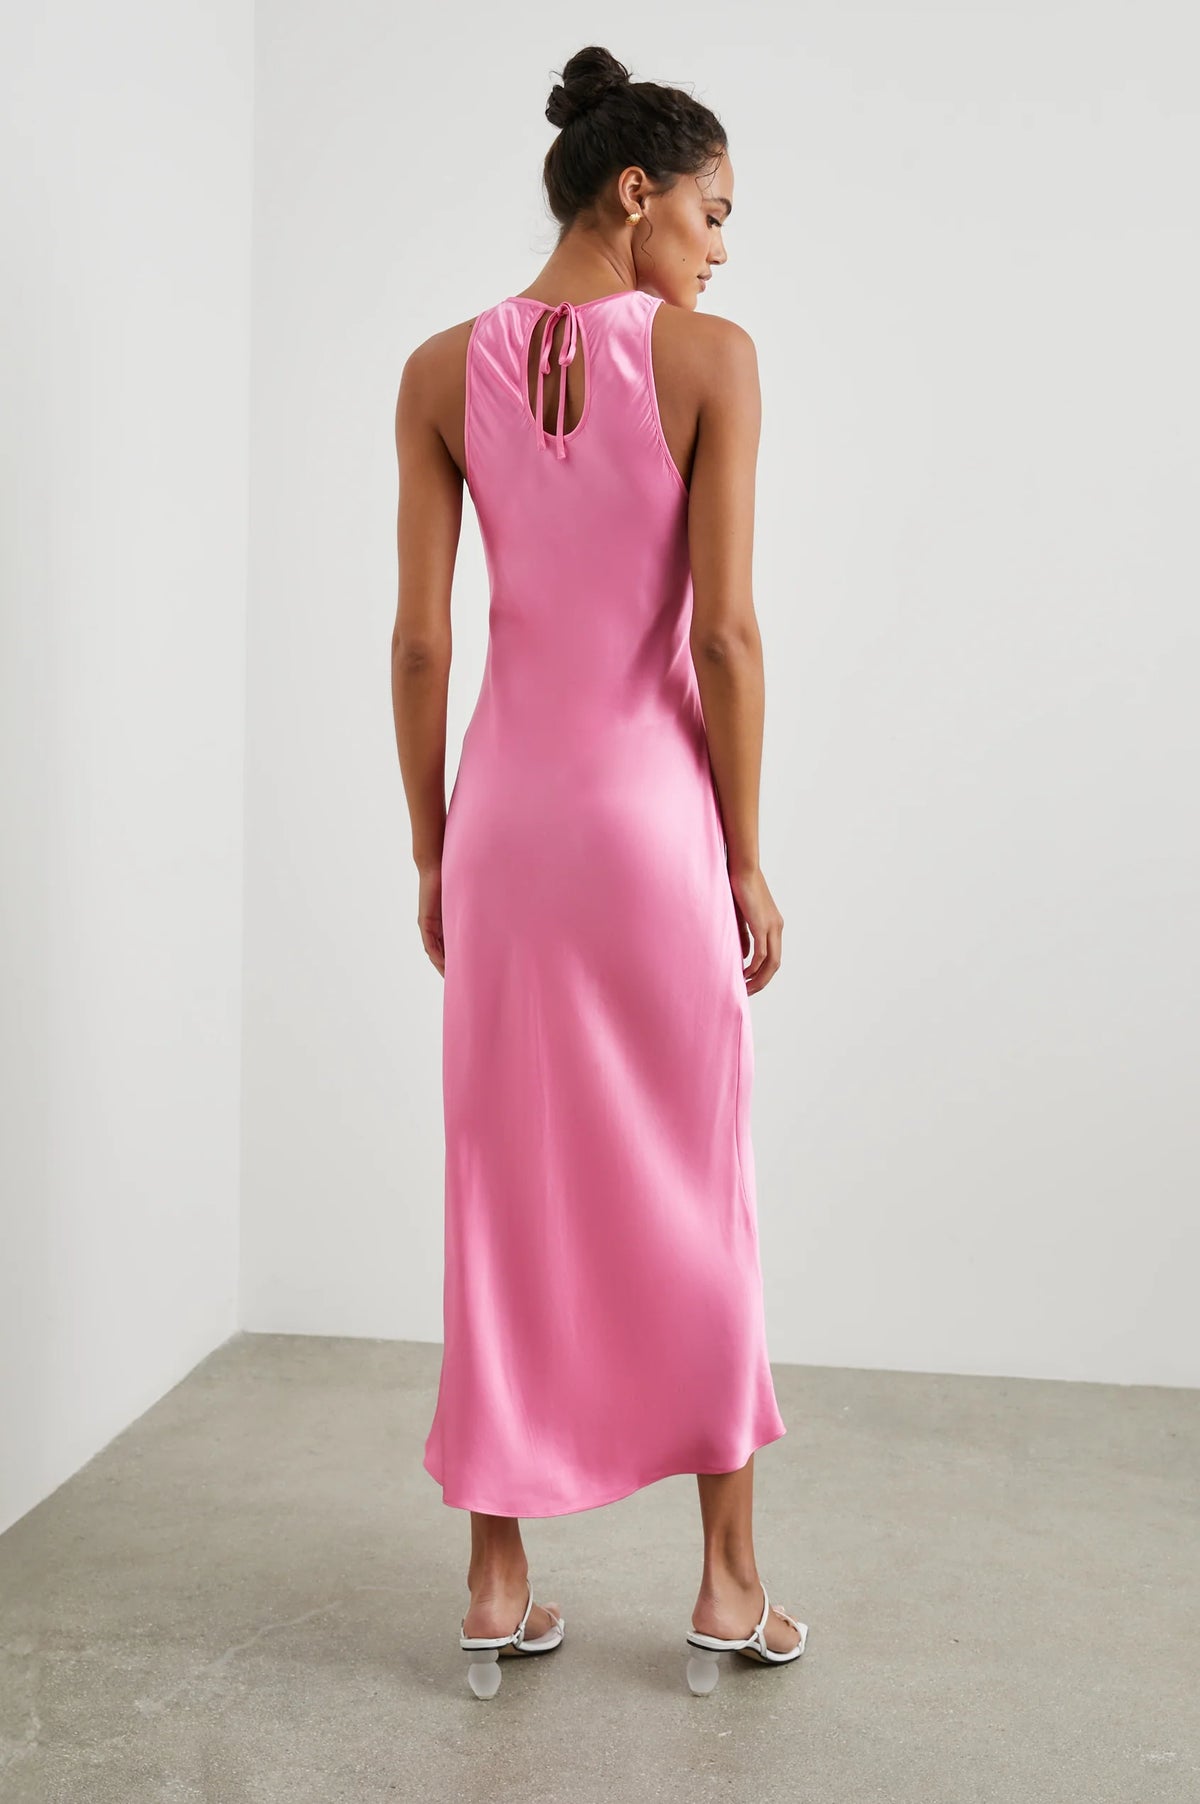 Rails Solene Dress in Malibu Pink at waterlilyshop.com